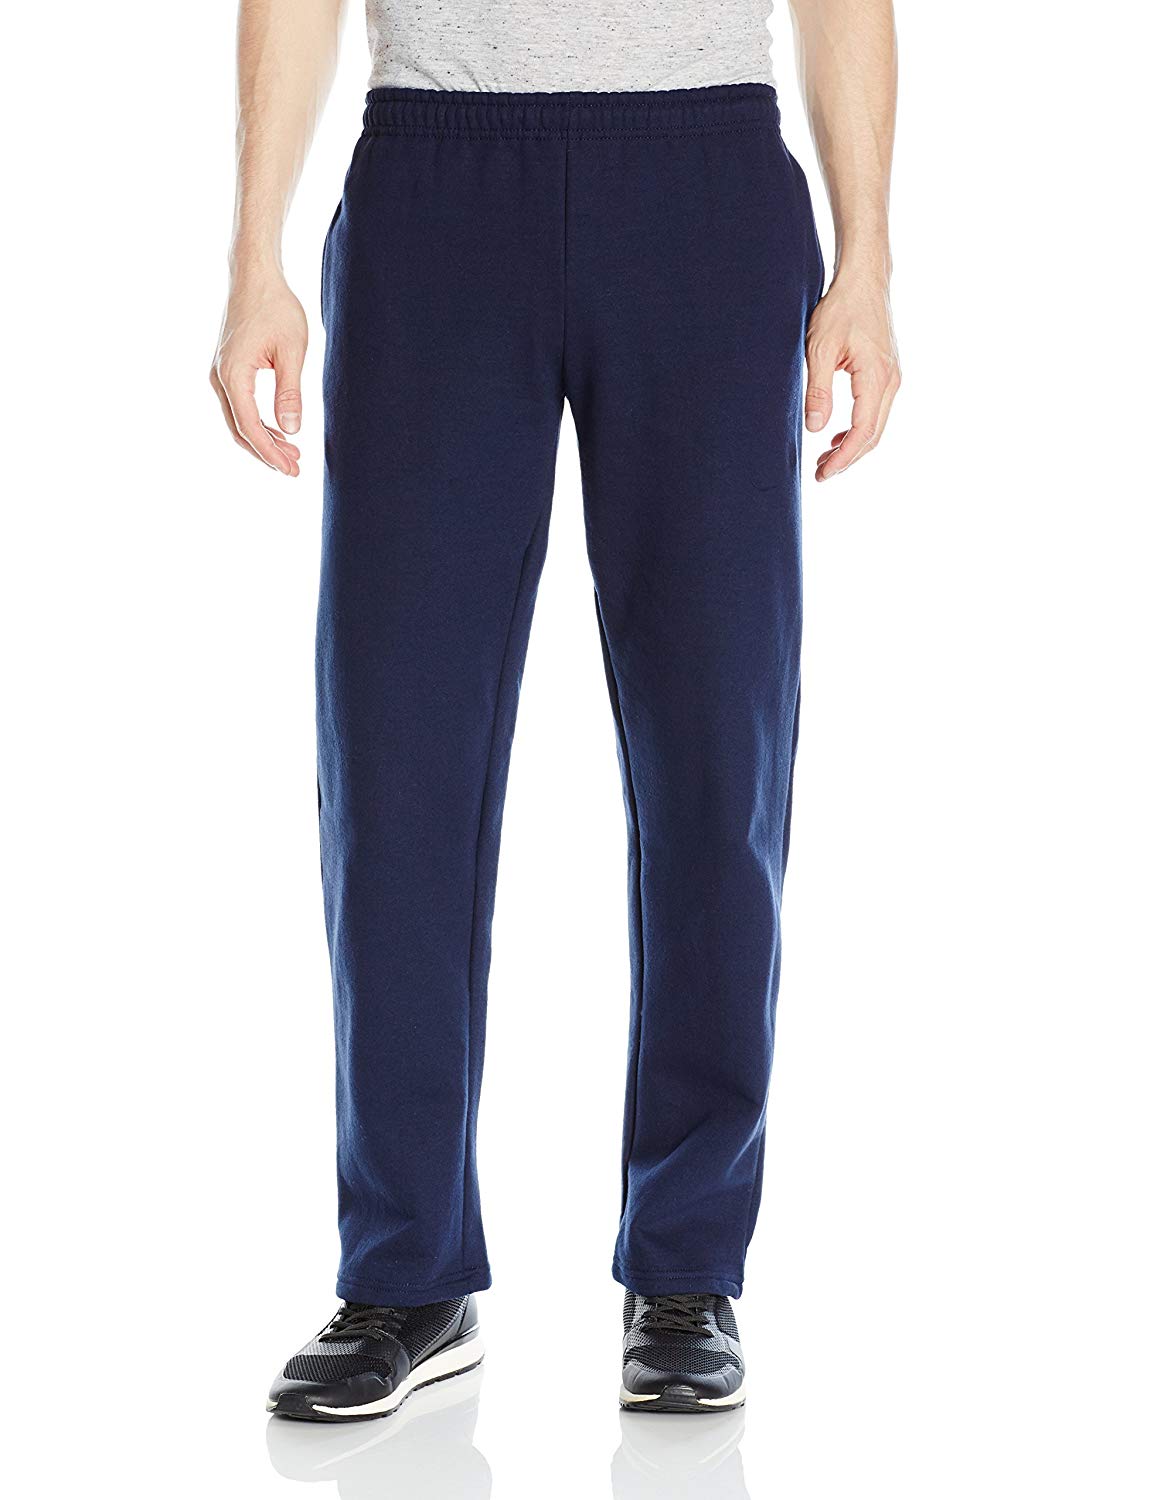 Gildan Men's Big and Tall Fleece Open Bottom Pocketed Pant,, Navy, Size ...